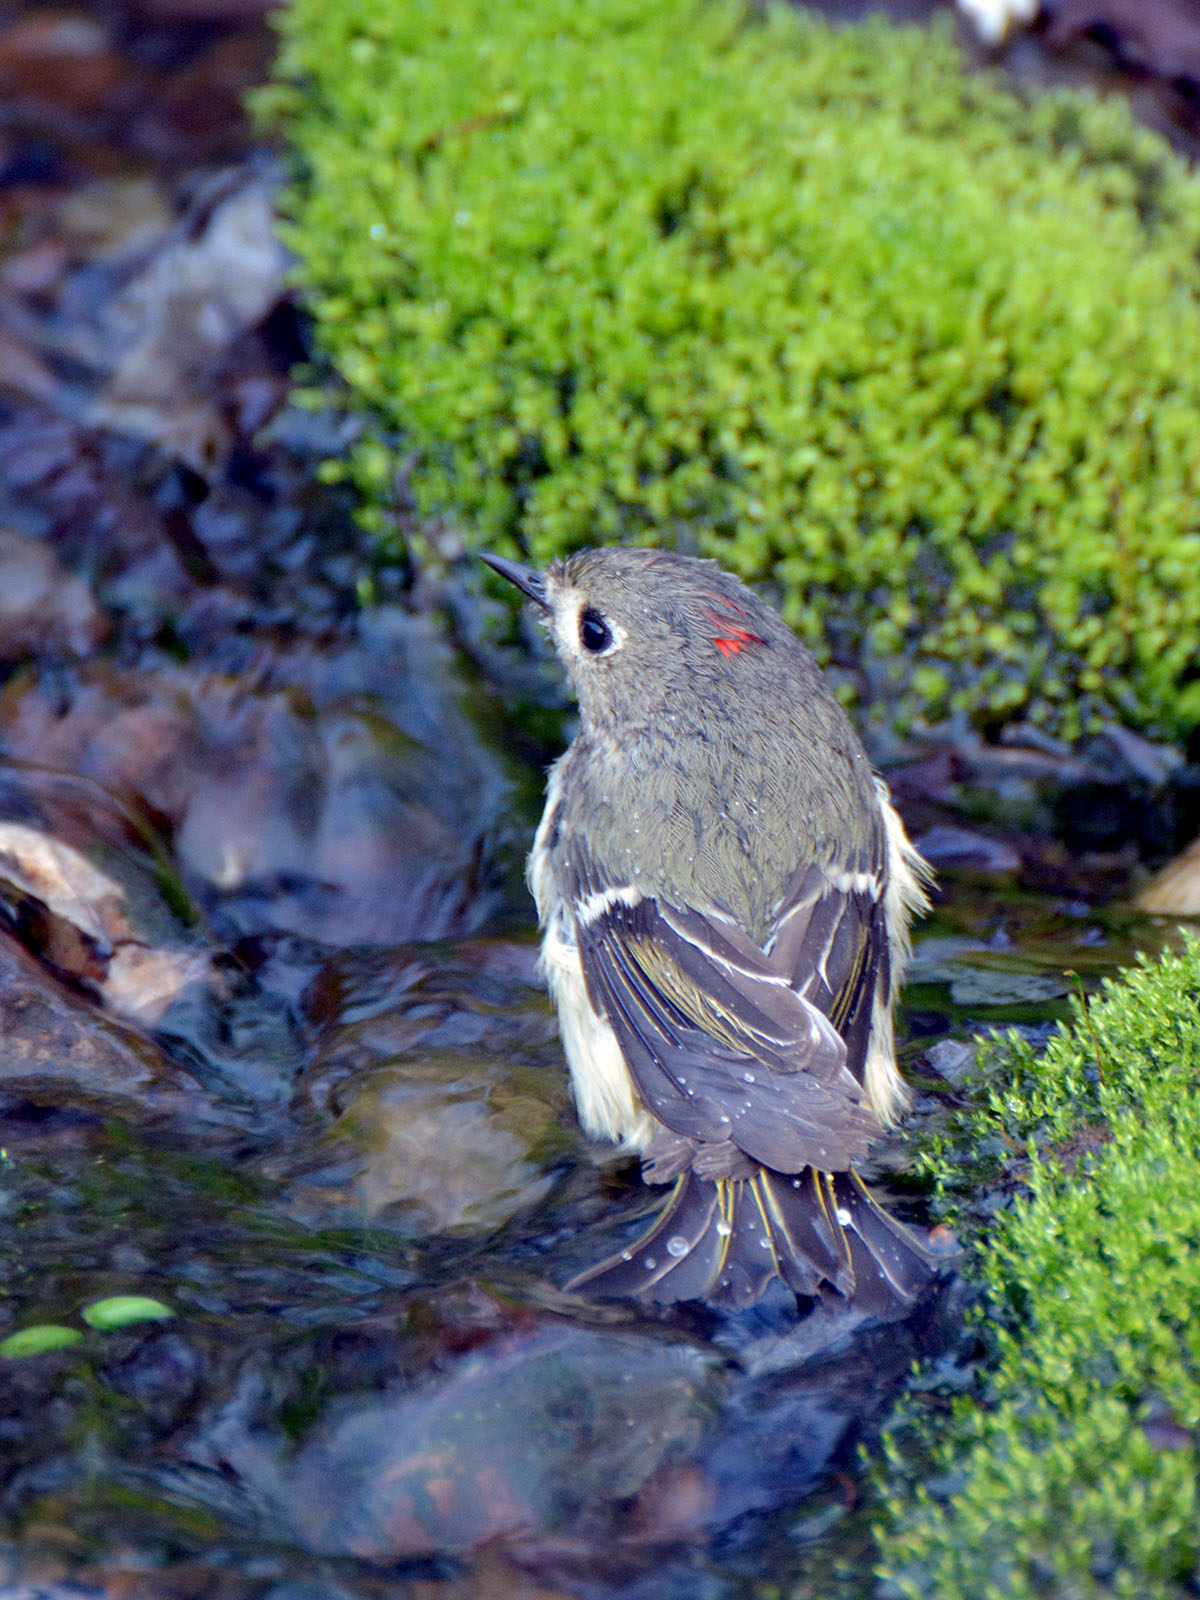 Ruby-crowned kinglet taking a bath